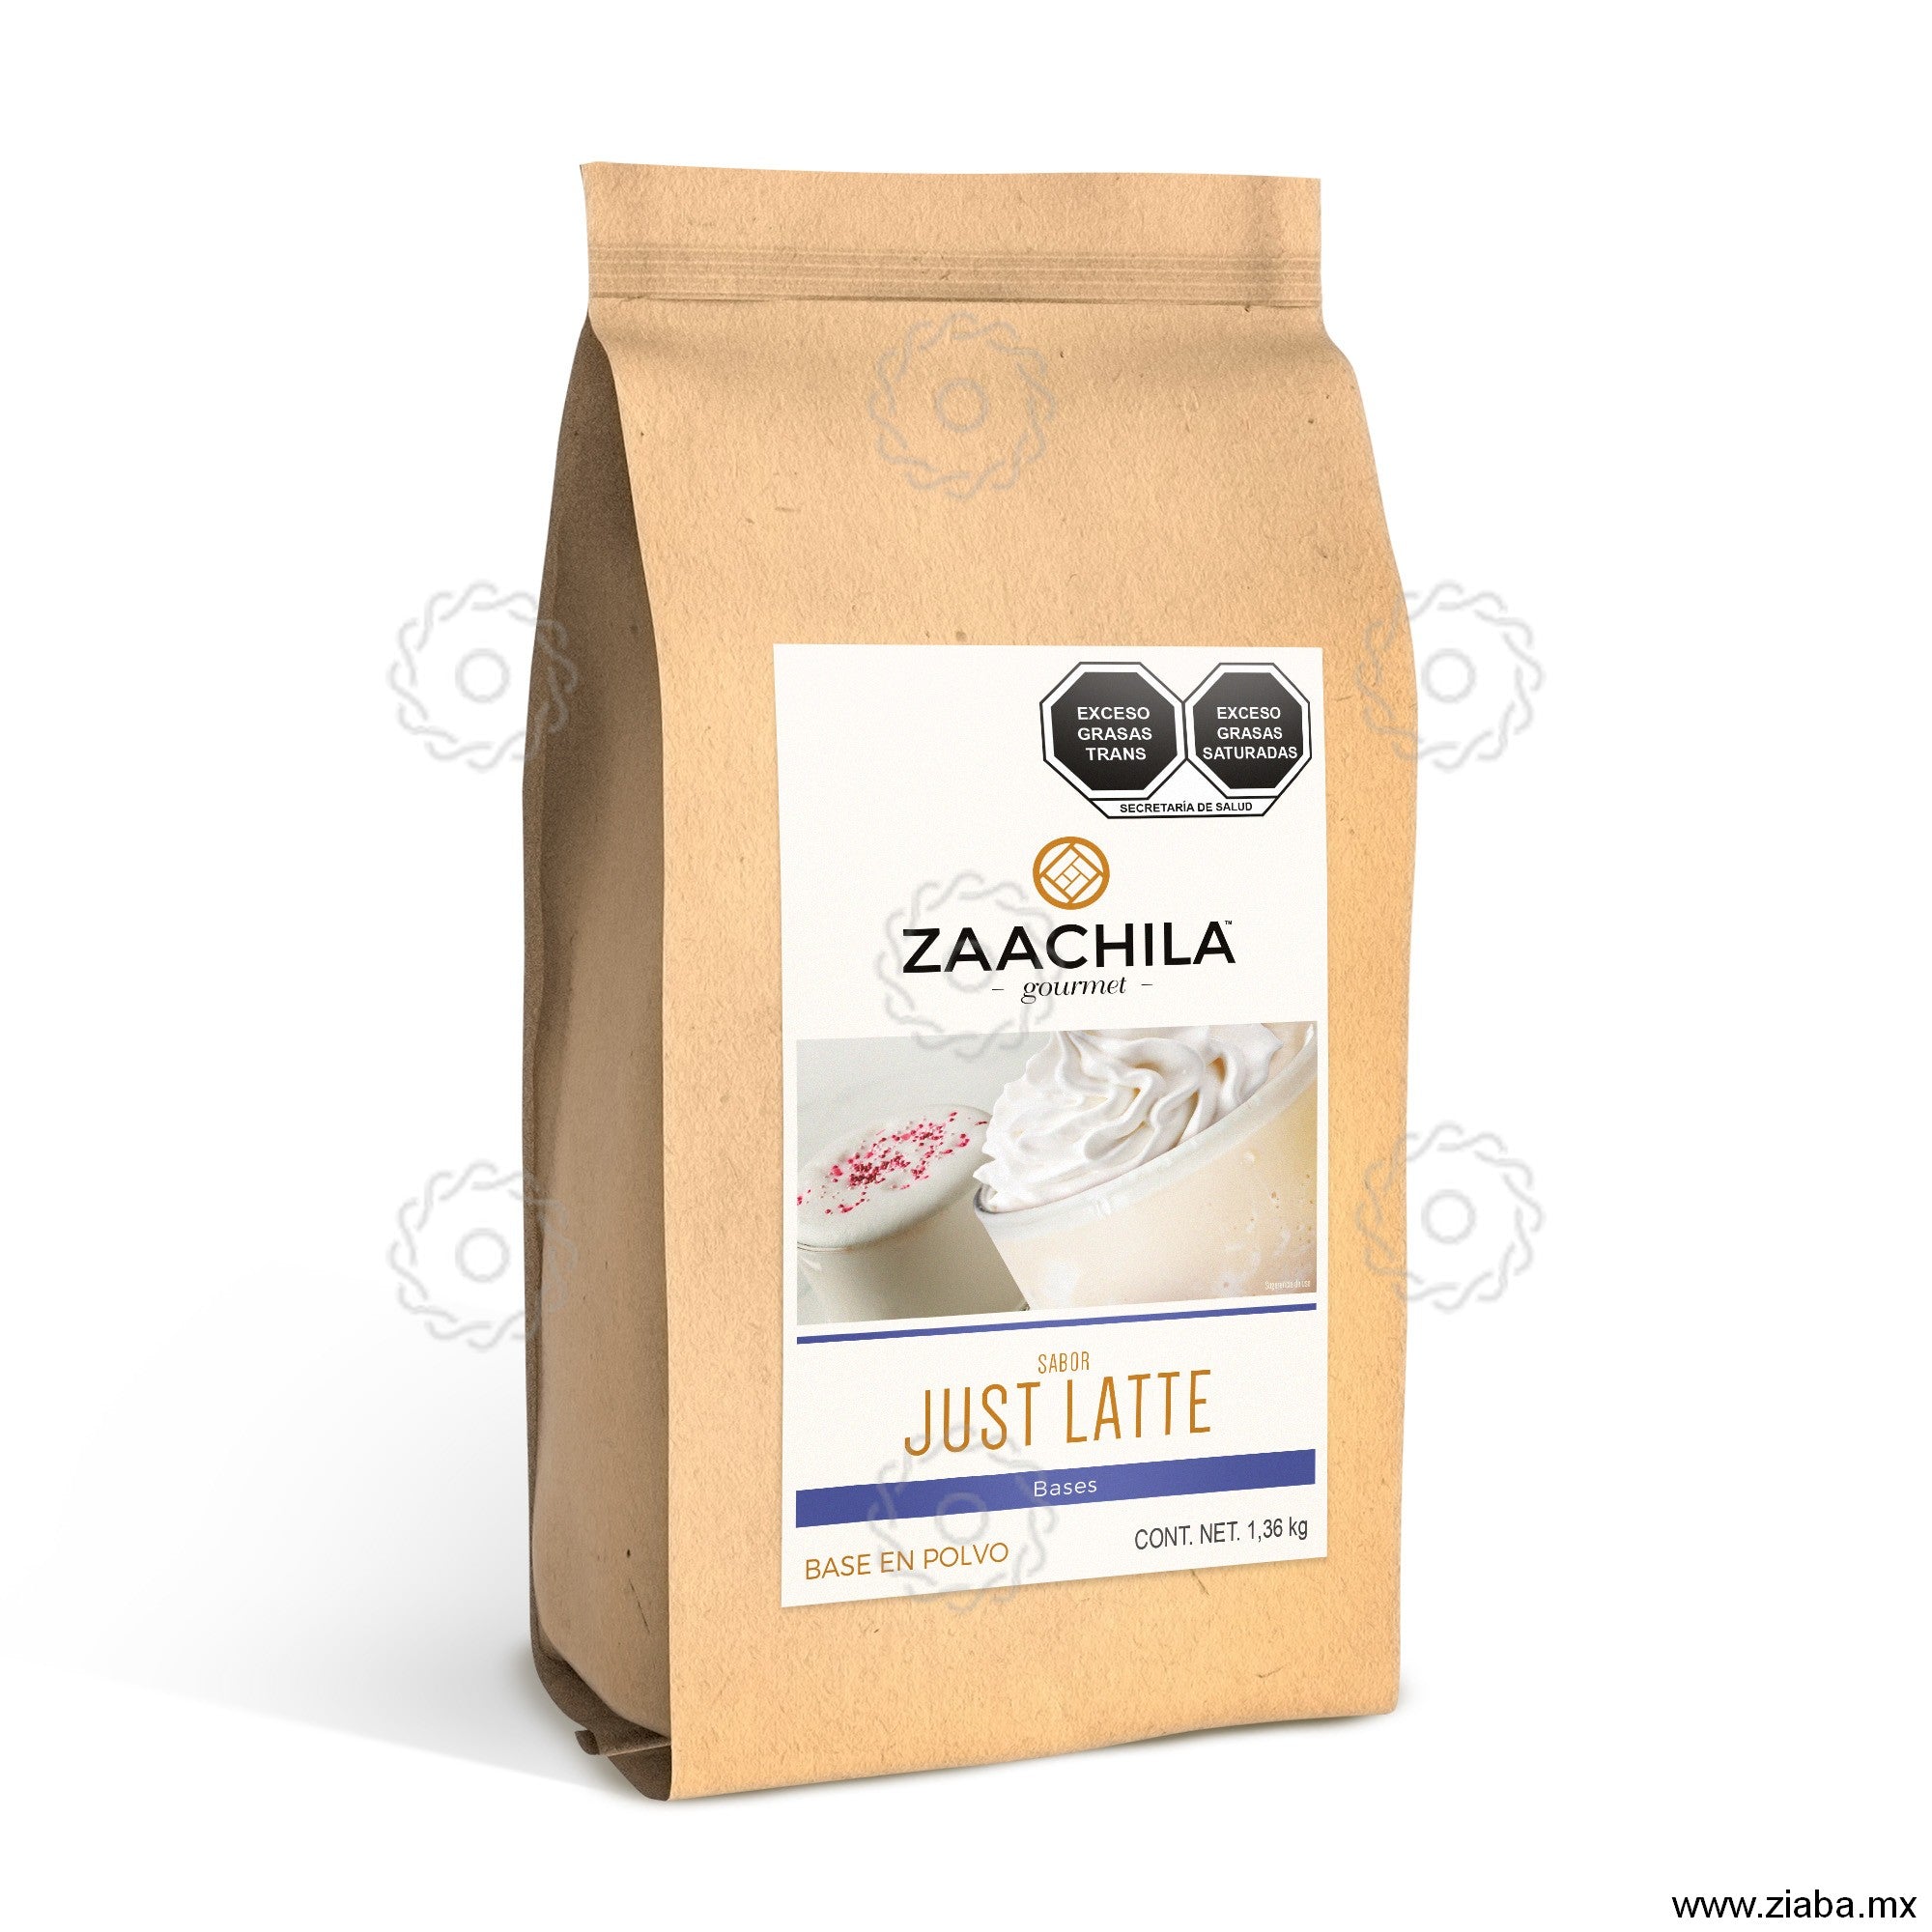 Just Latte - Zaachila